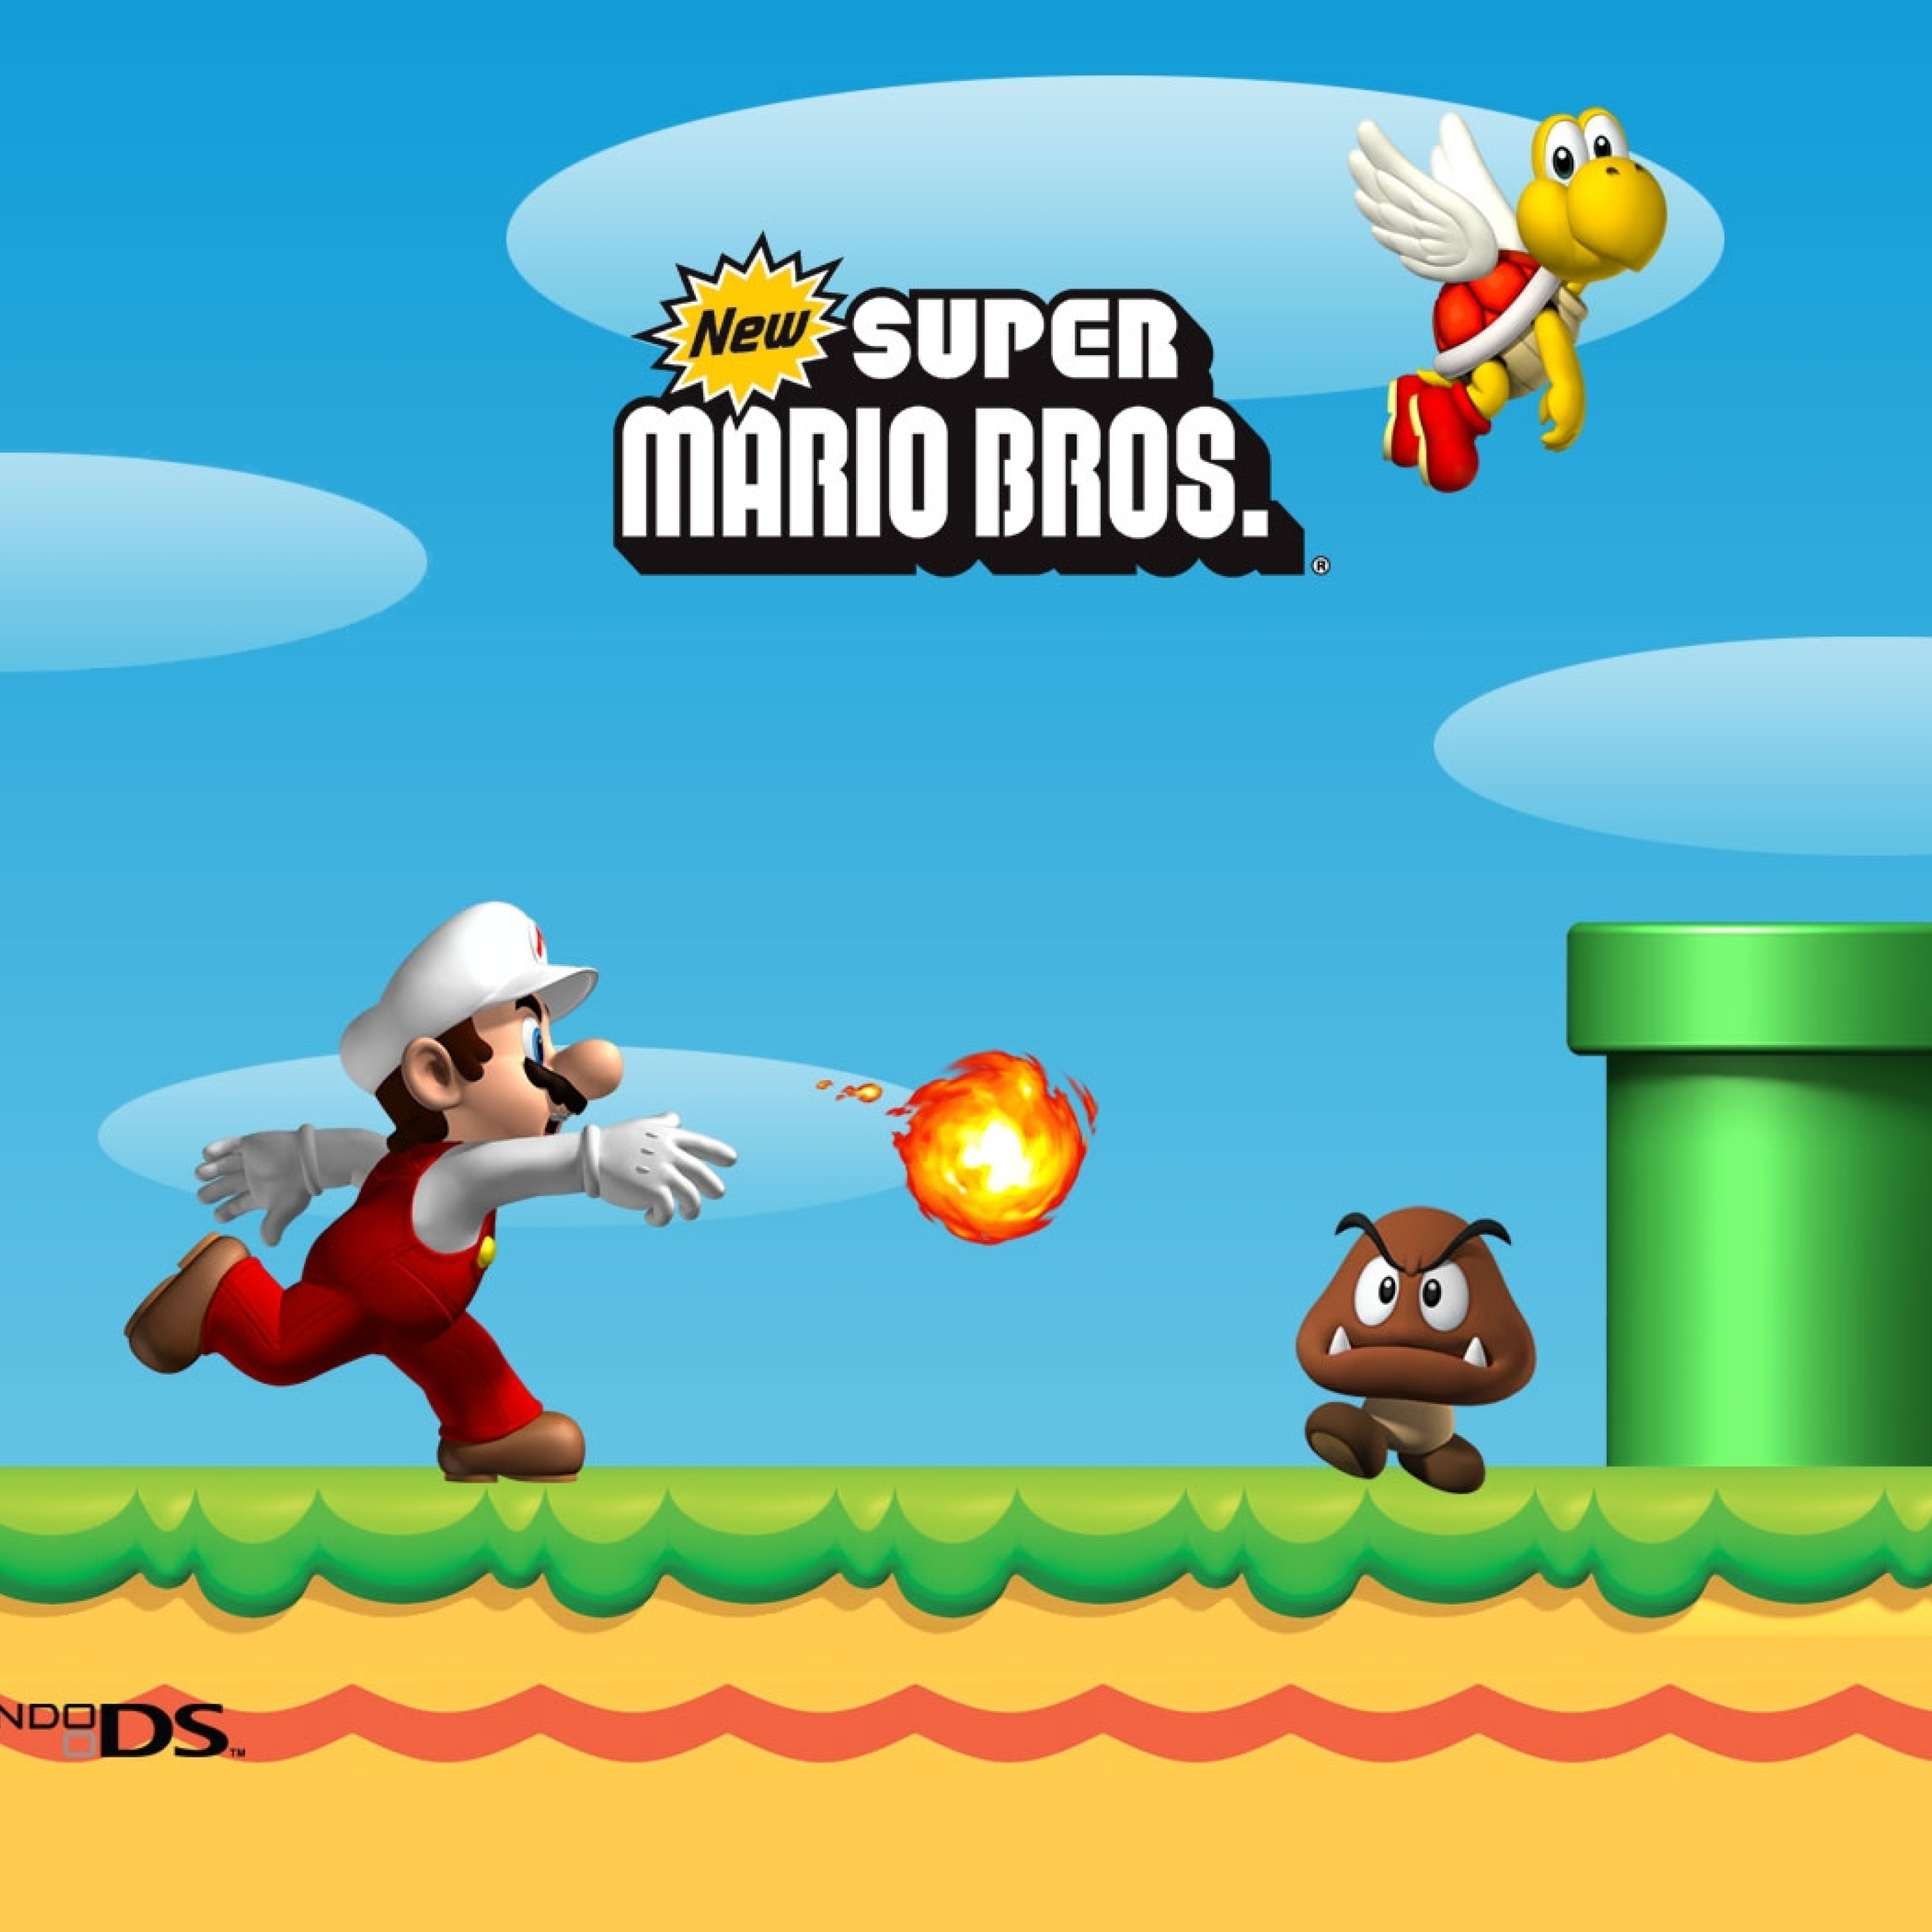 Super mario bros game. Игры super Mario Bros. New super Mario Bros. Игра. Игра Марио супер Марио БРОС. Марио 1985.